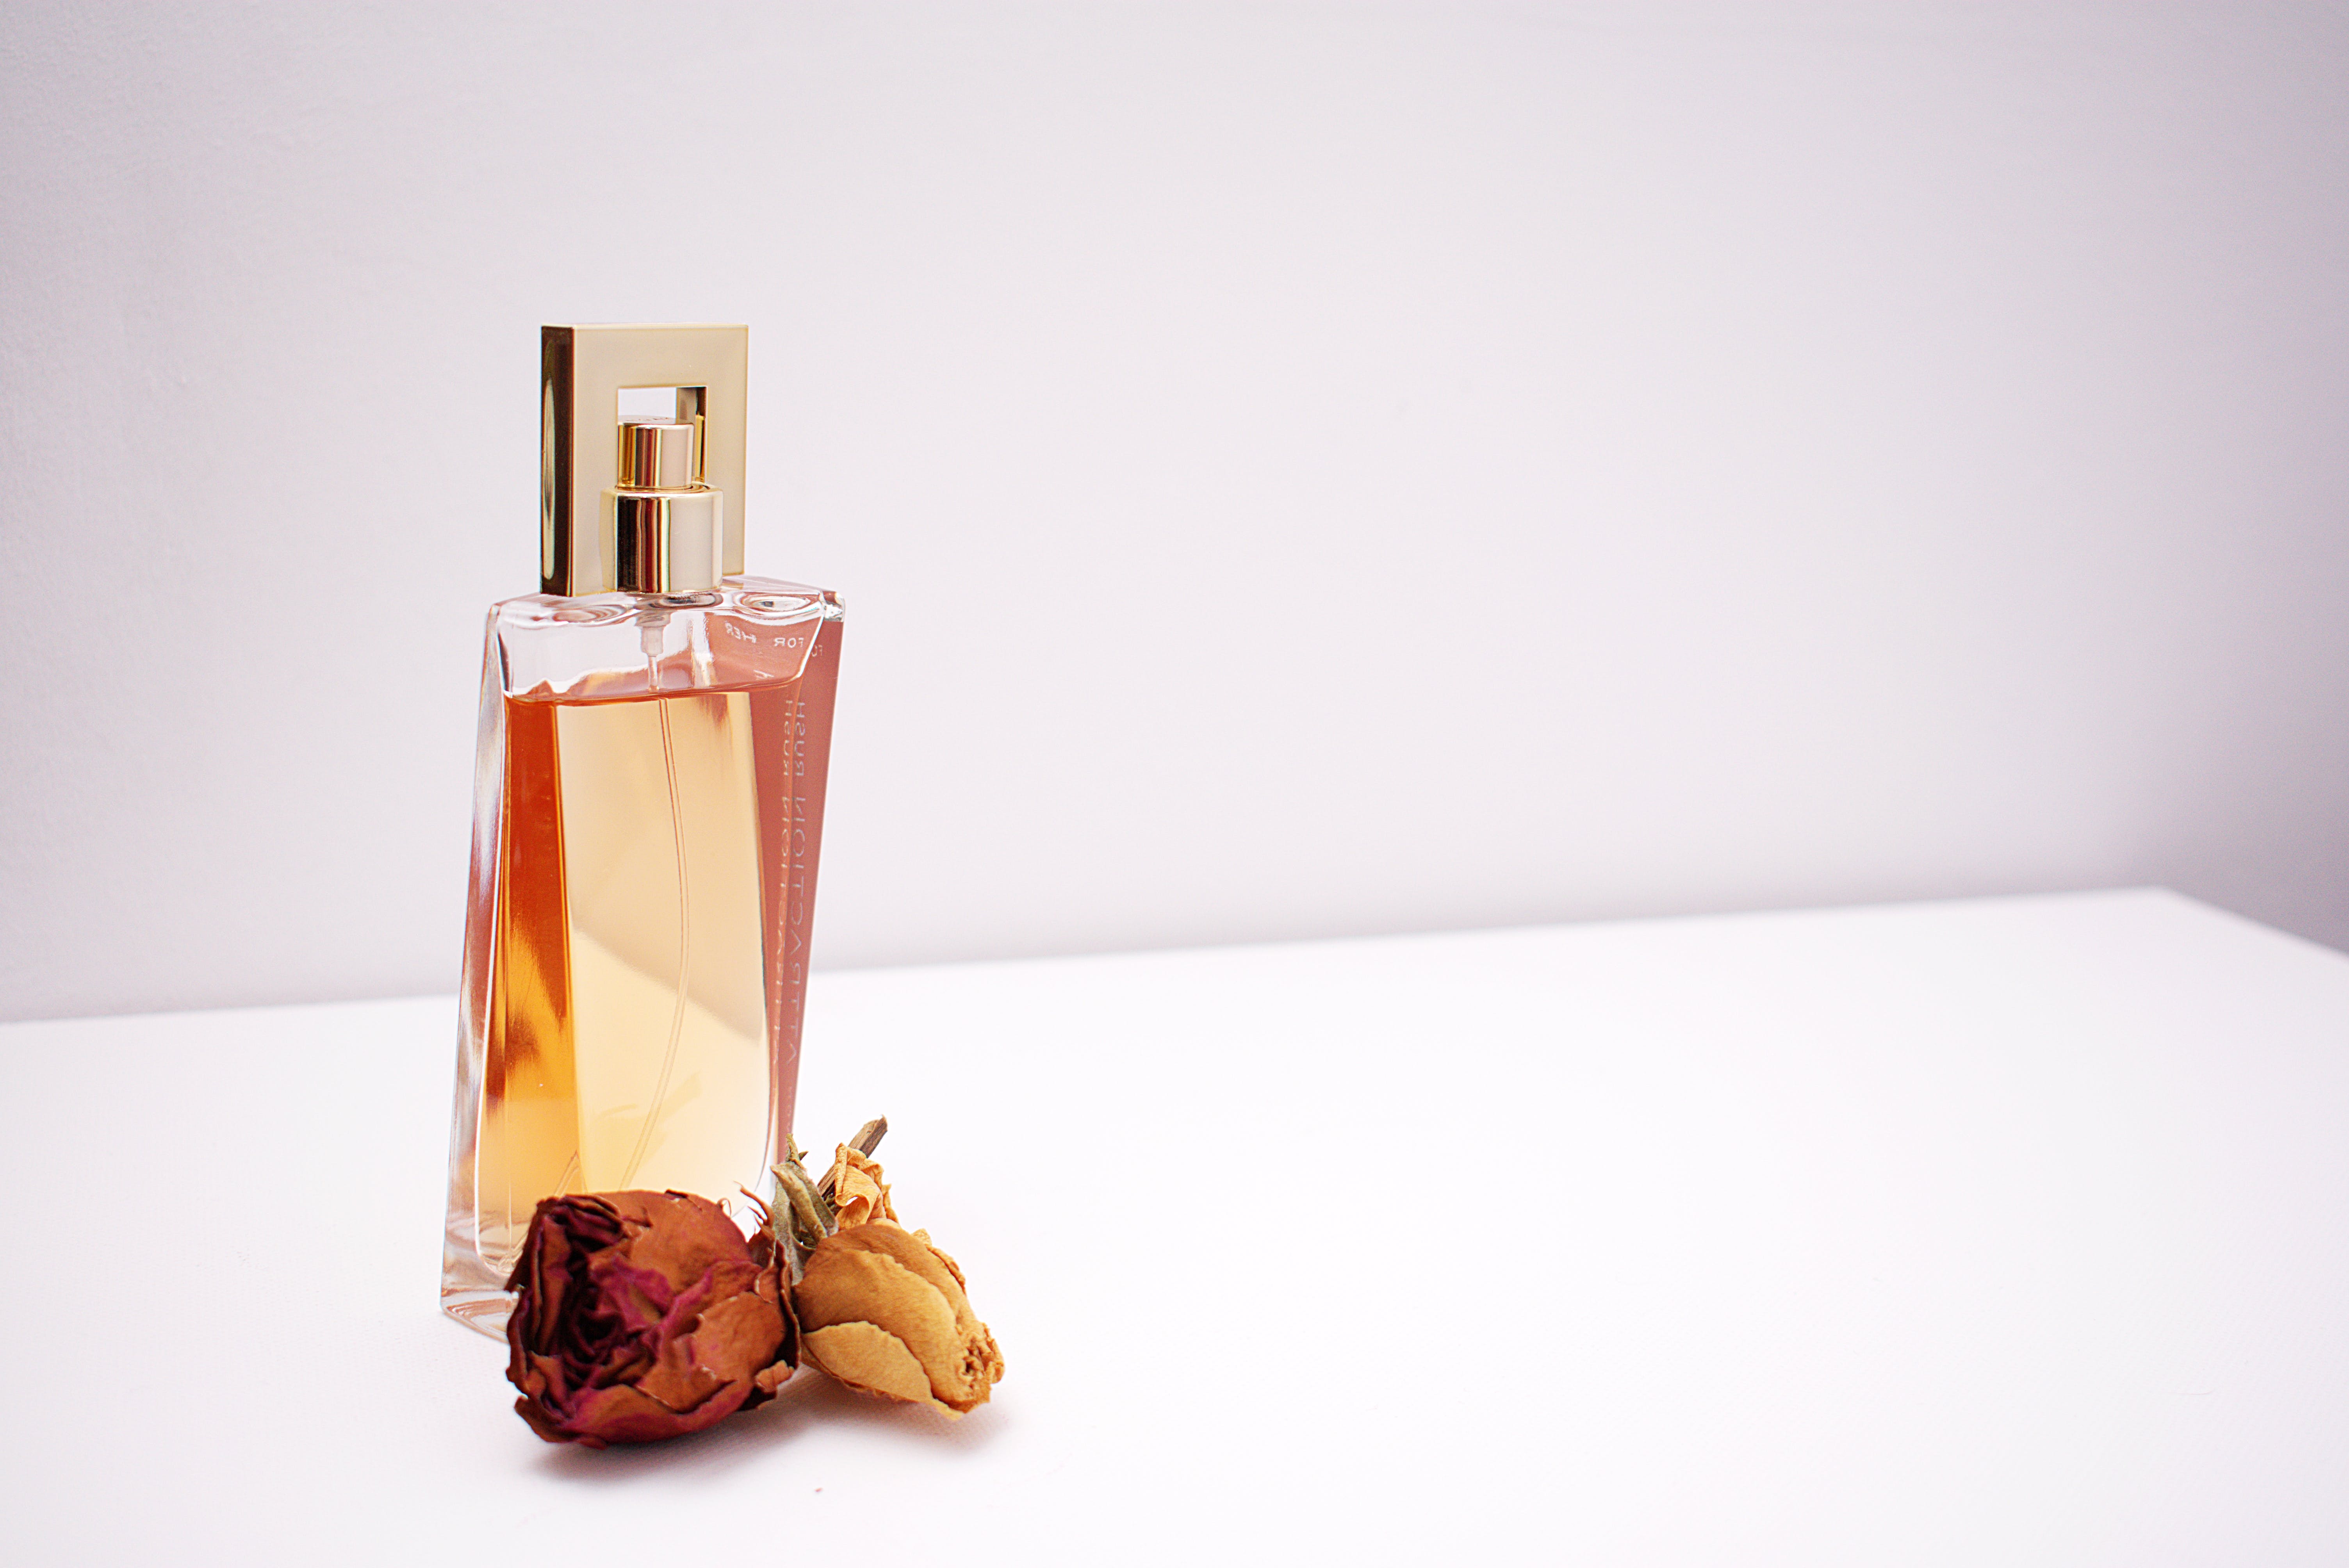 A perfume bottle. | Source: Pexels